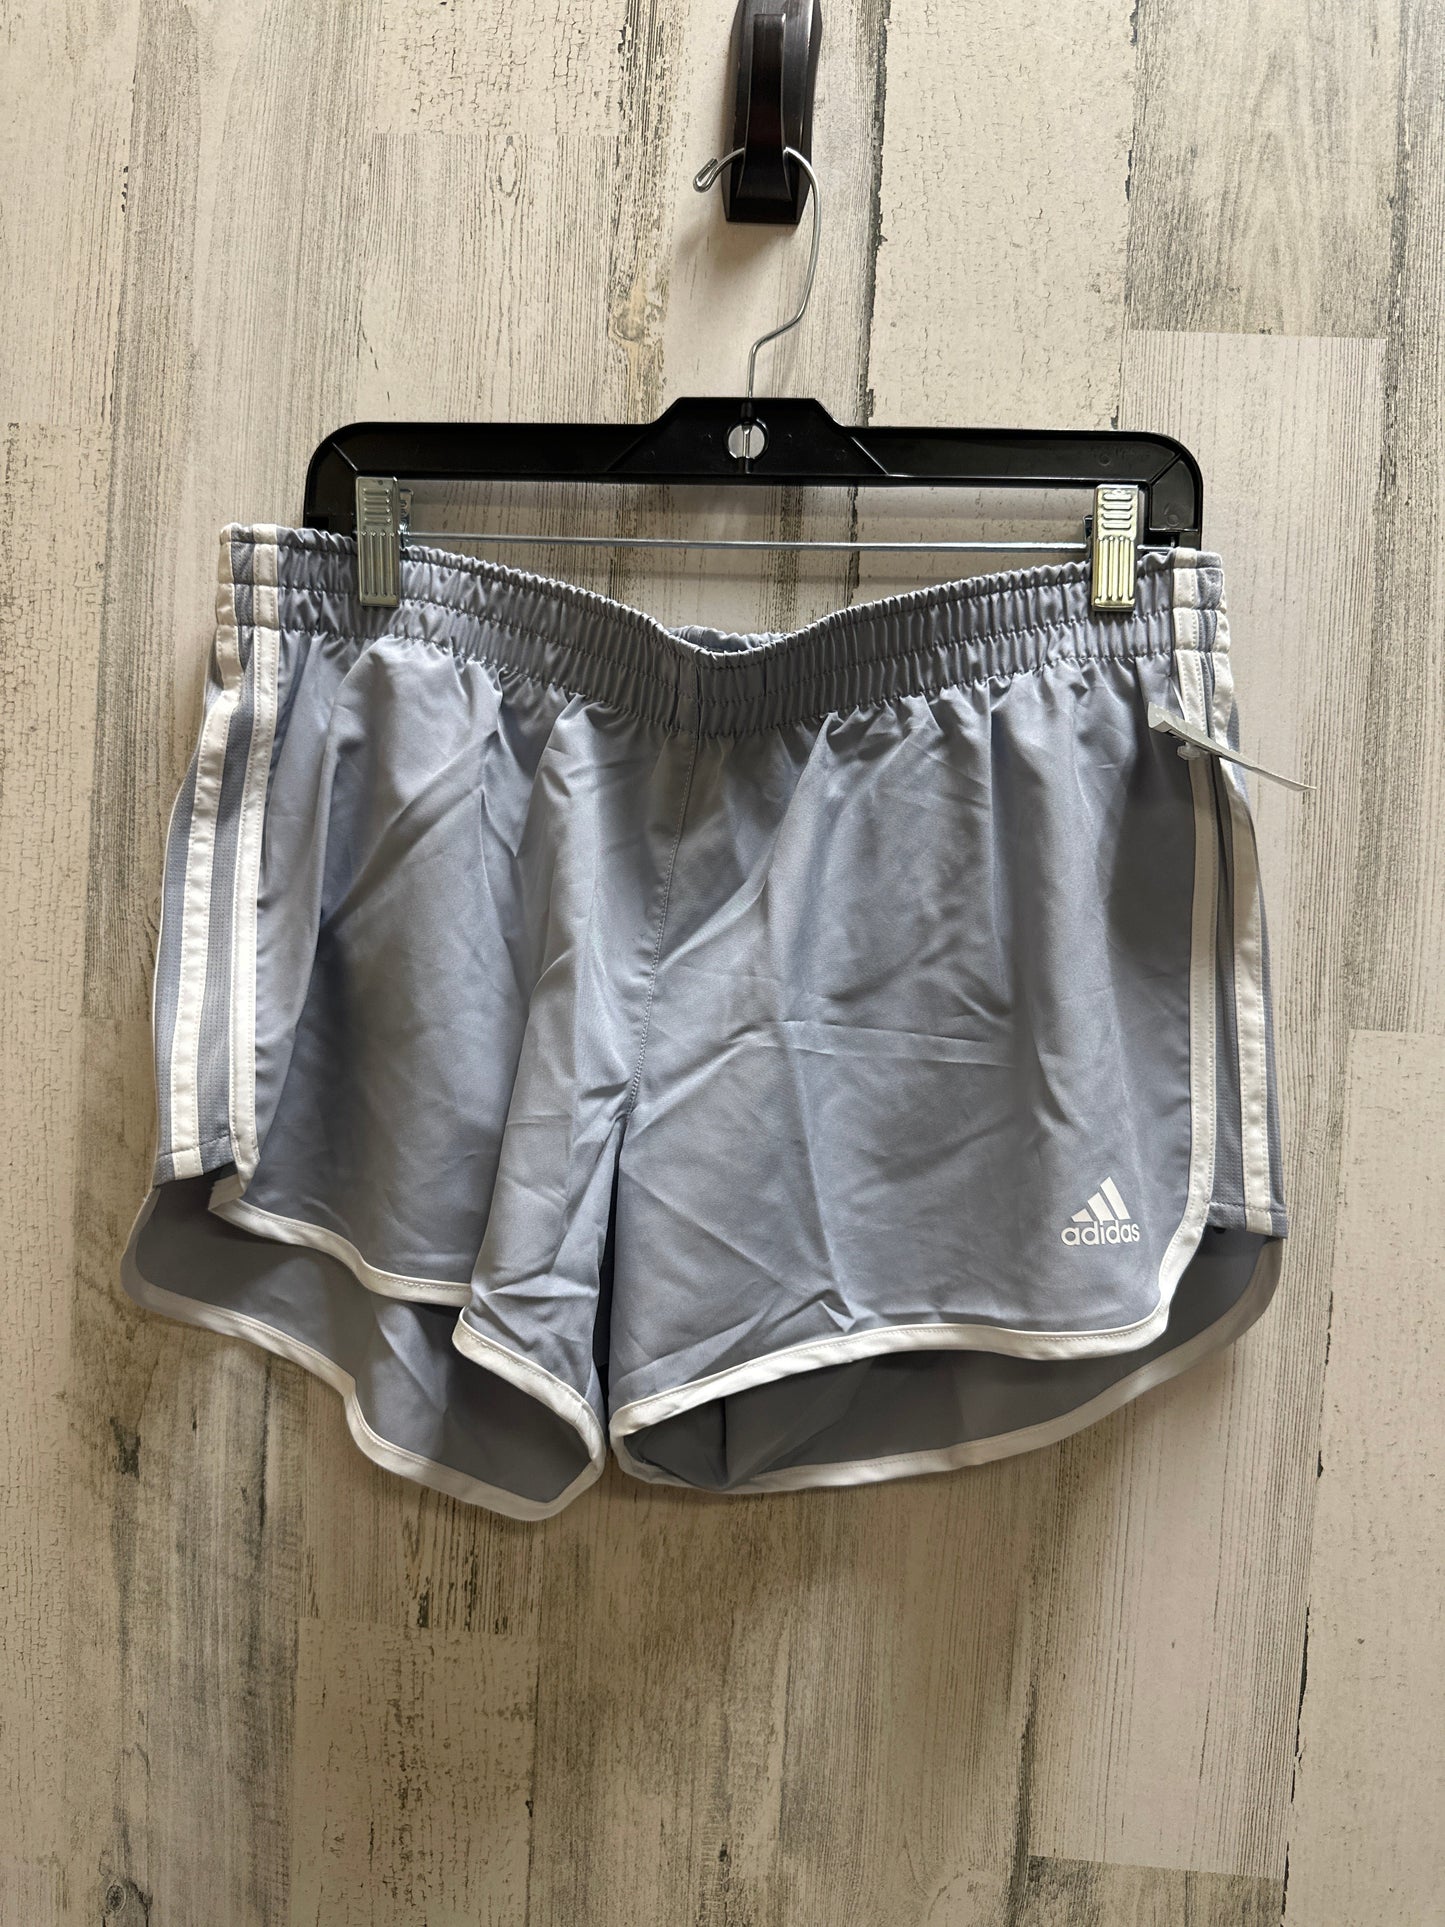 Grey Athletic Shorts Adidas, Size L